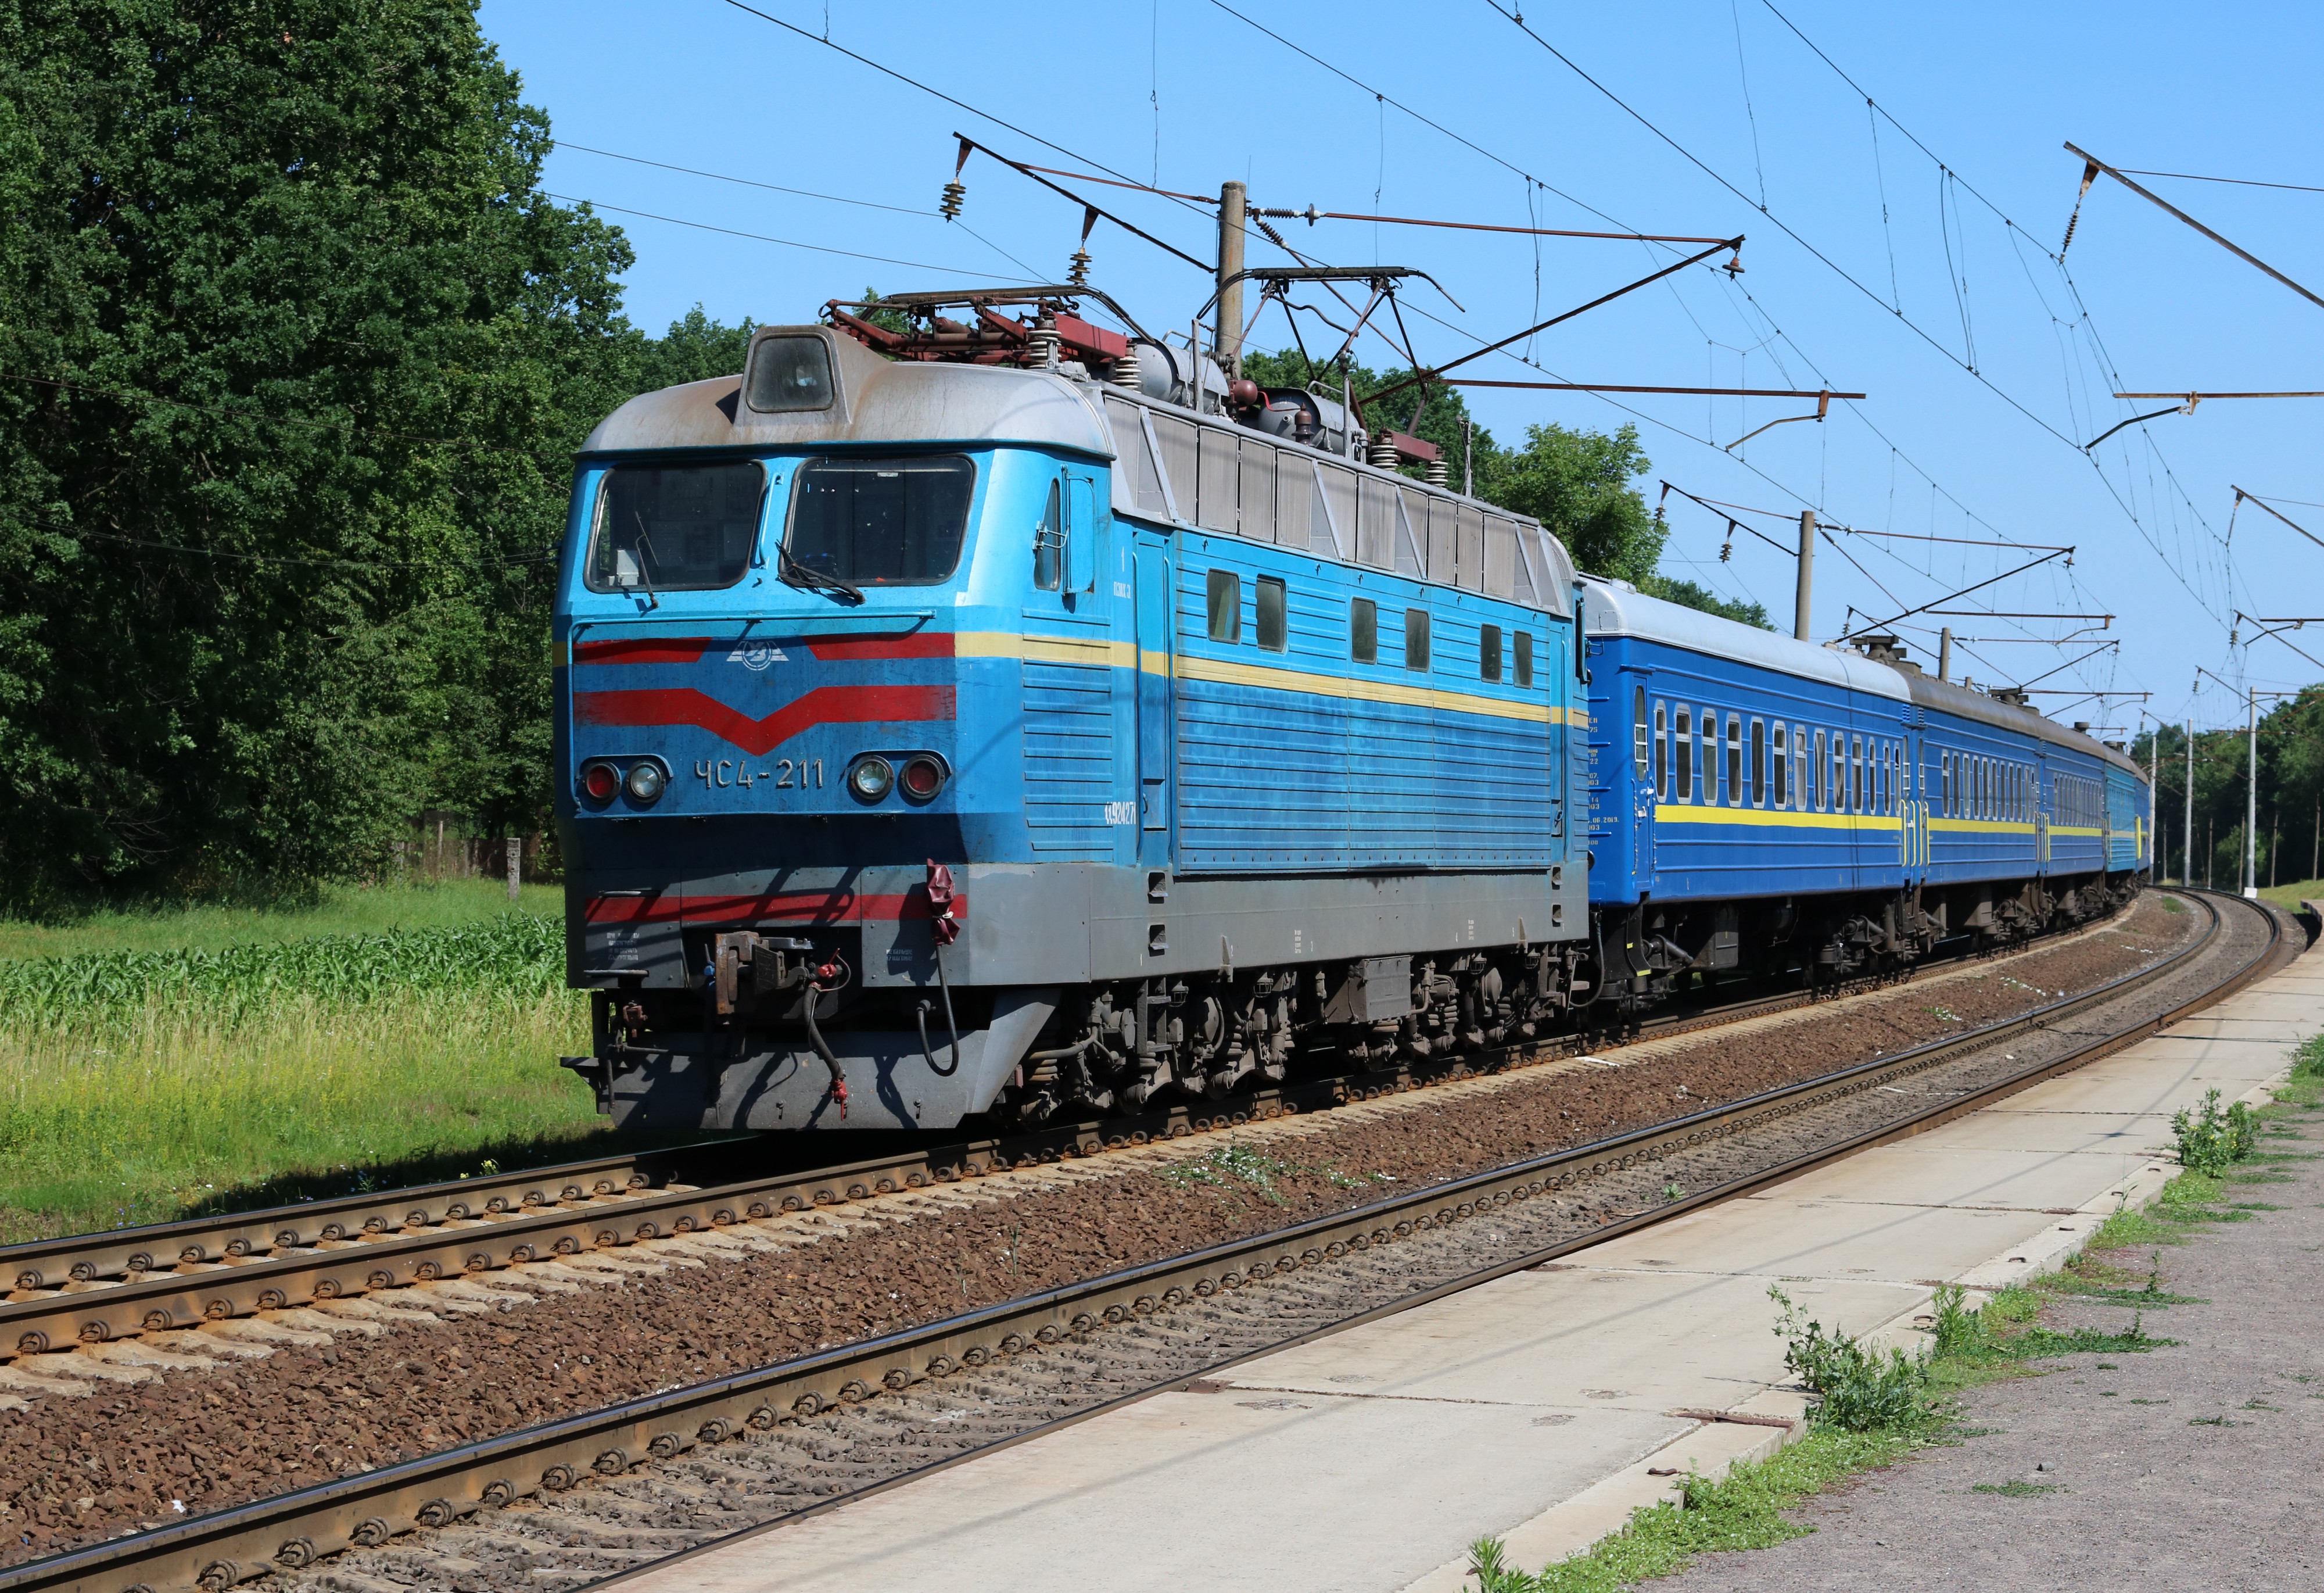 Locomotive ChS4-211 2017 G1